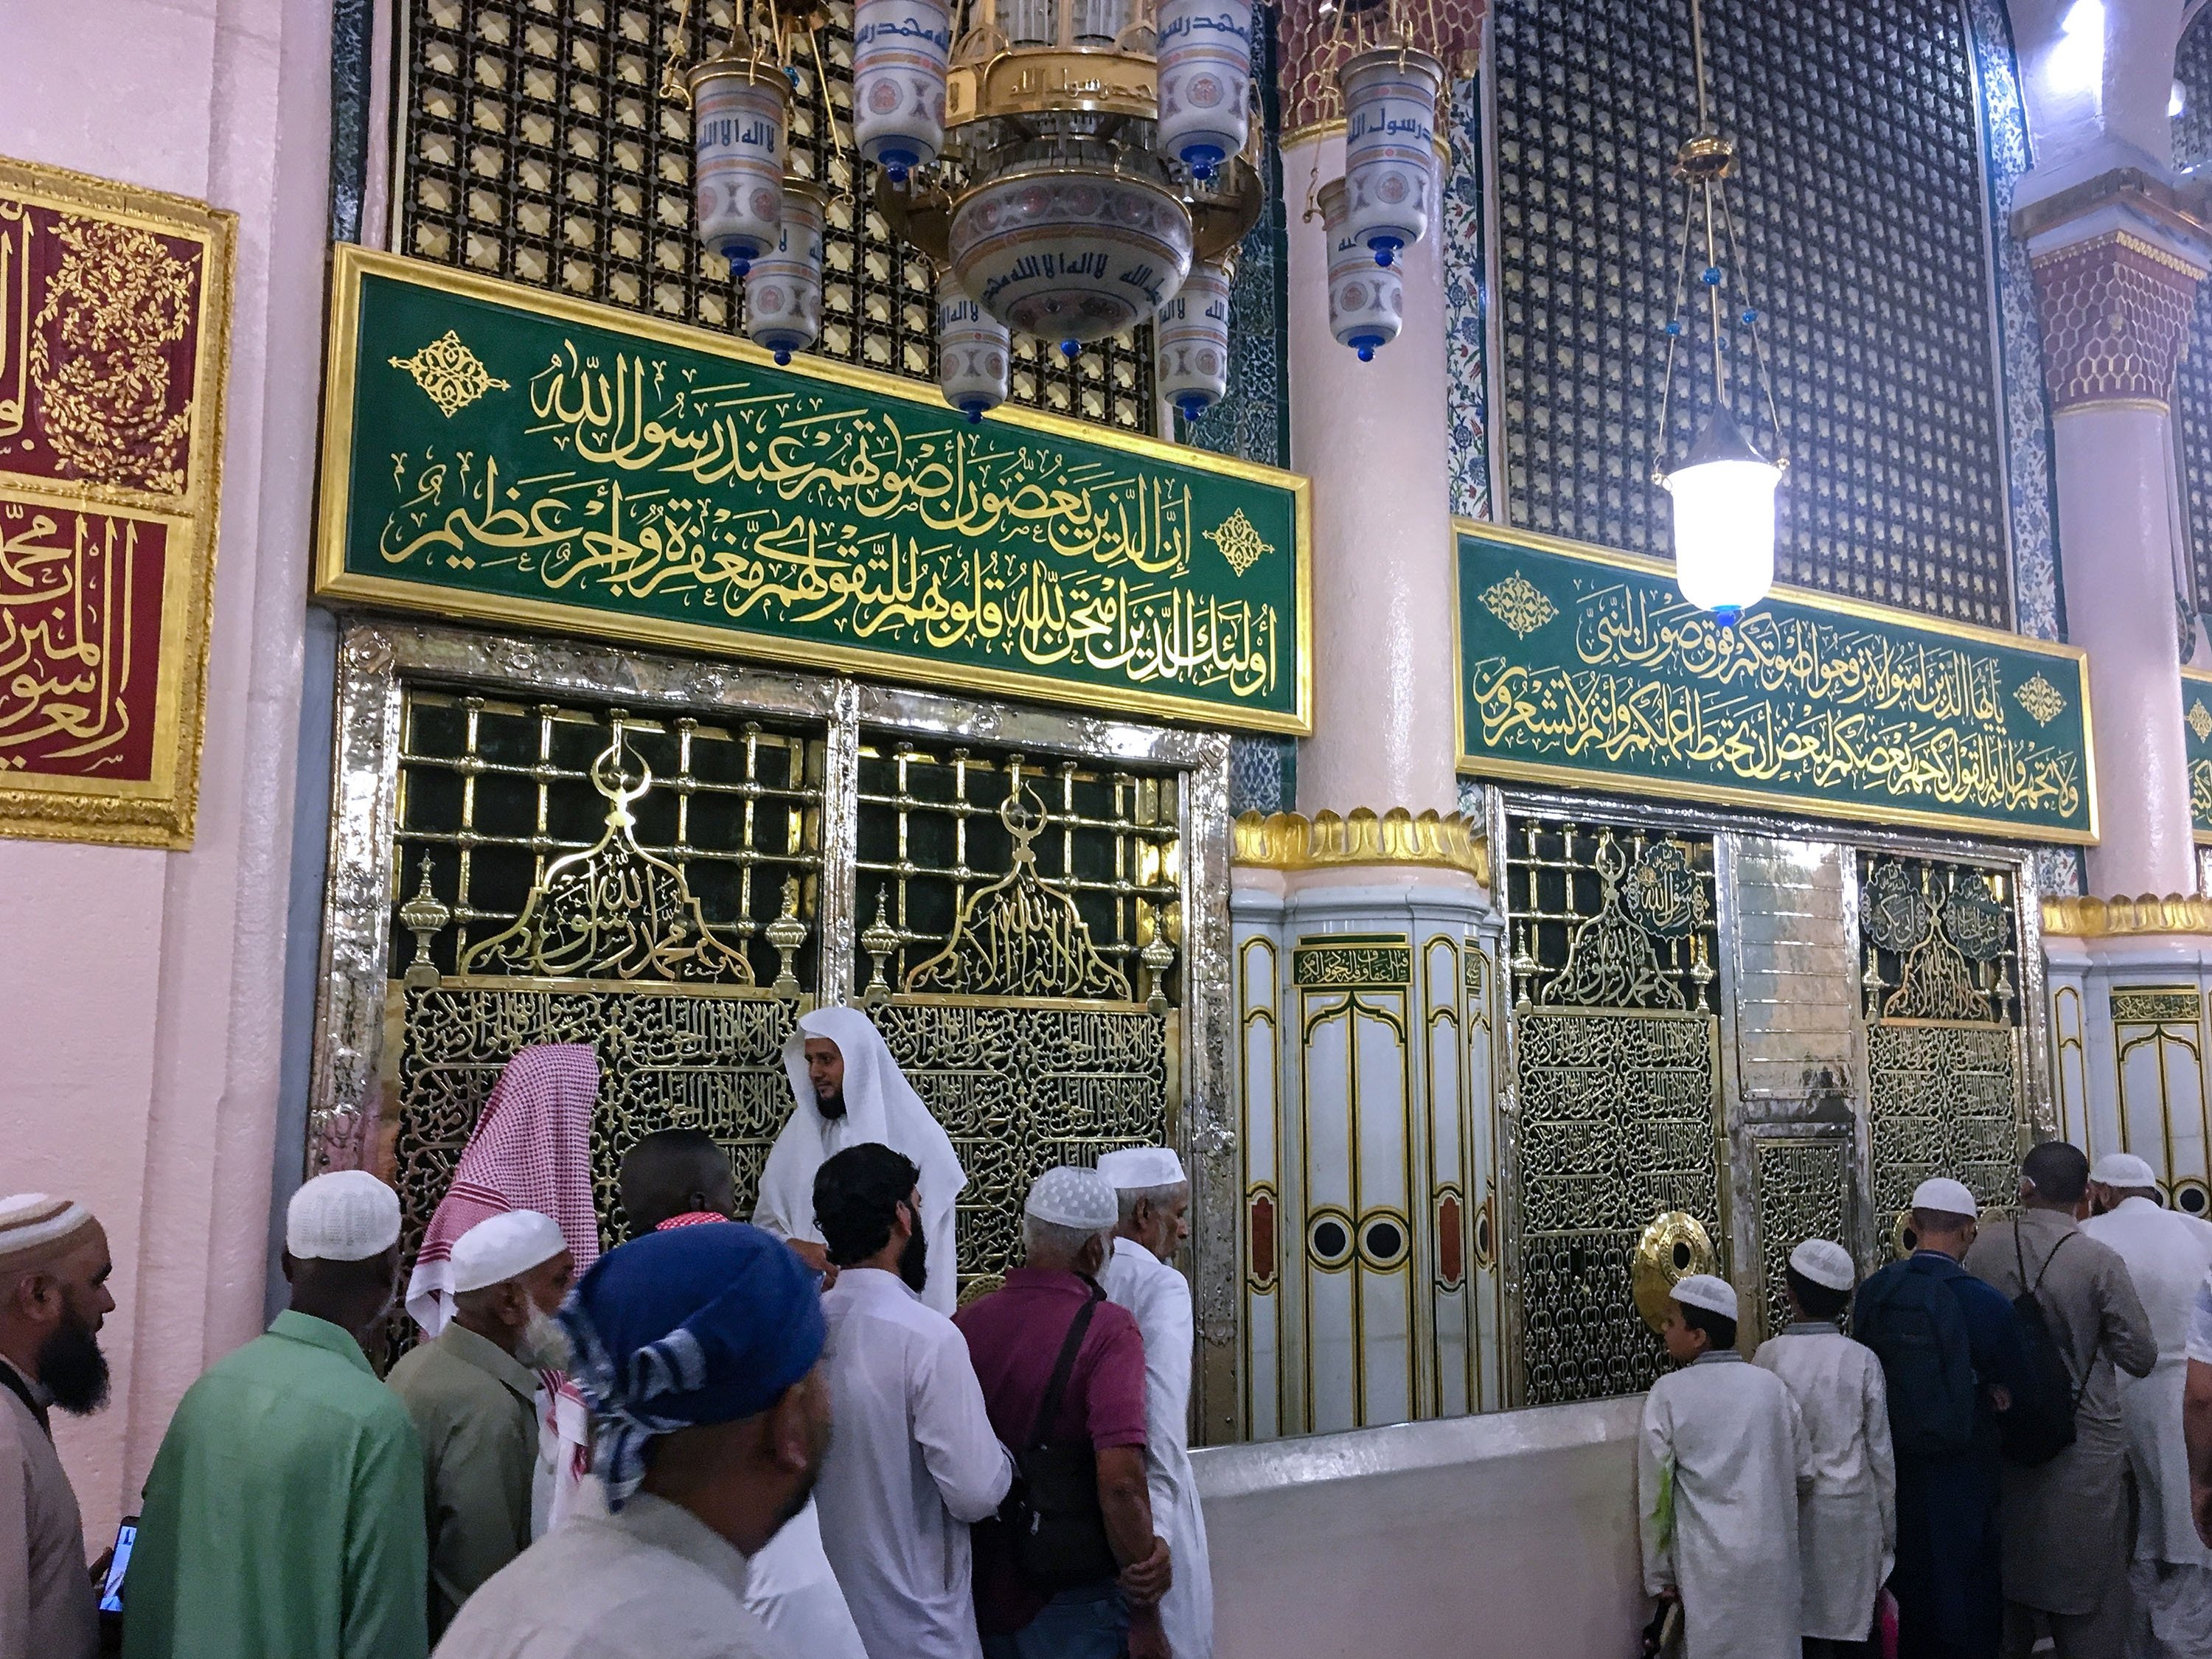 People visit the tomb of the Prophet Muhammad, and early Muslim leaders Abu Bakr and Umar, in Medina, Saudi Arabia, June 24, 2019. (Shutterstock Photo)